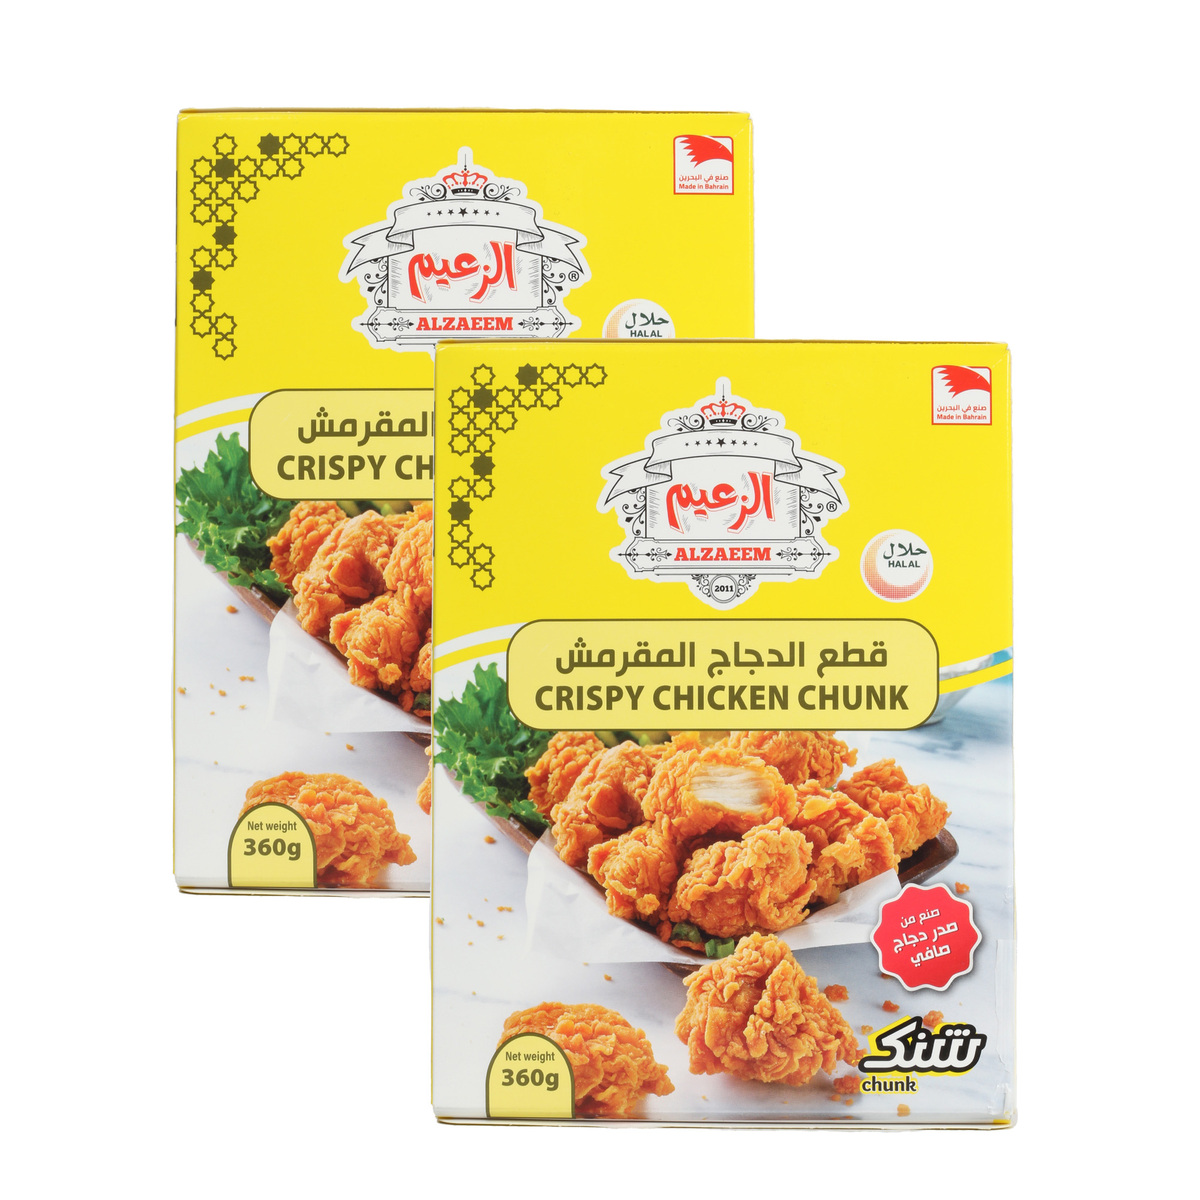 Al Zaeem Crispy Chicken Chunk Value Pack 2 x 360g